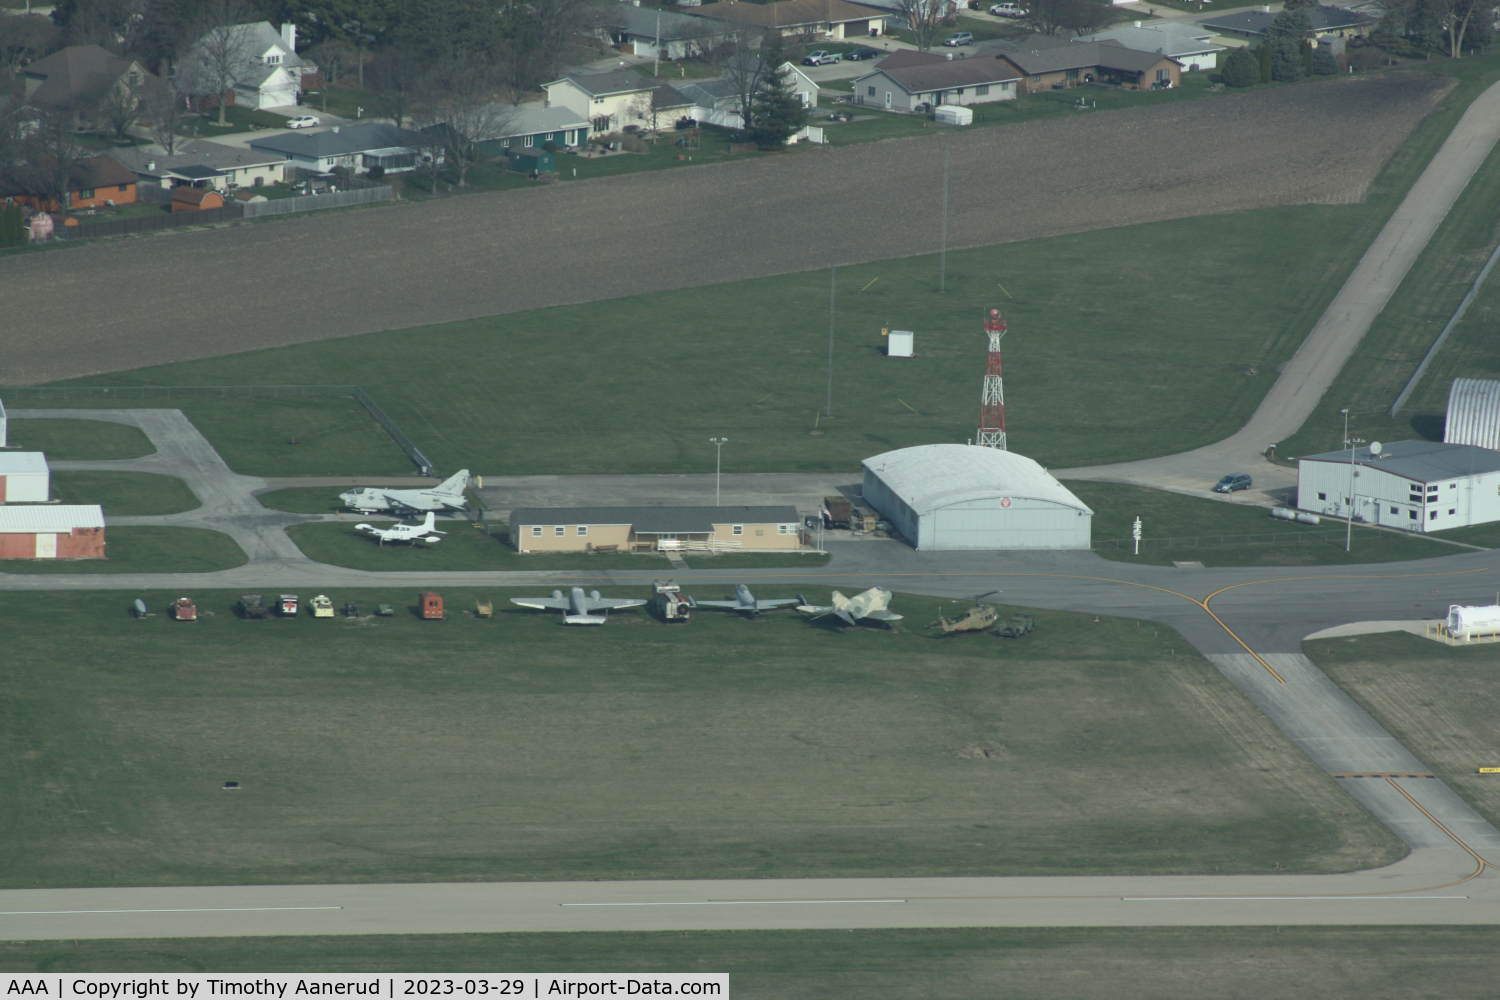 Logan County Airport (AAA) - Logan County airport, Lincoln IL USA, Musuem ramp area